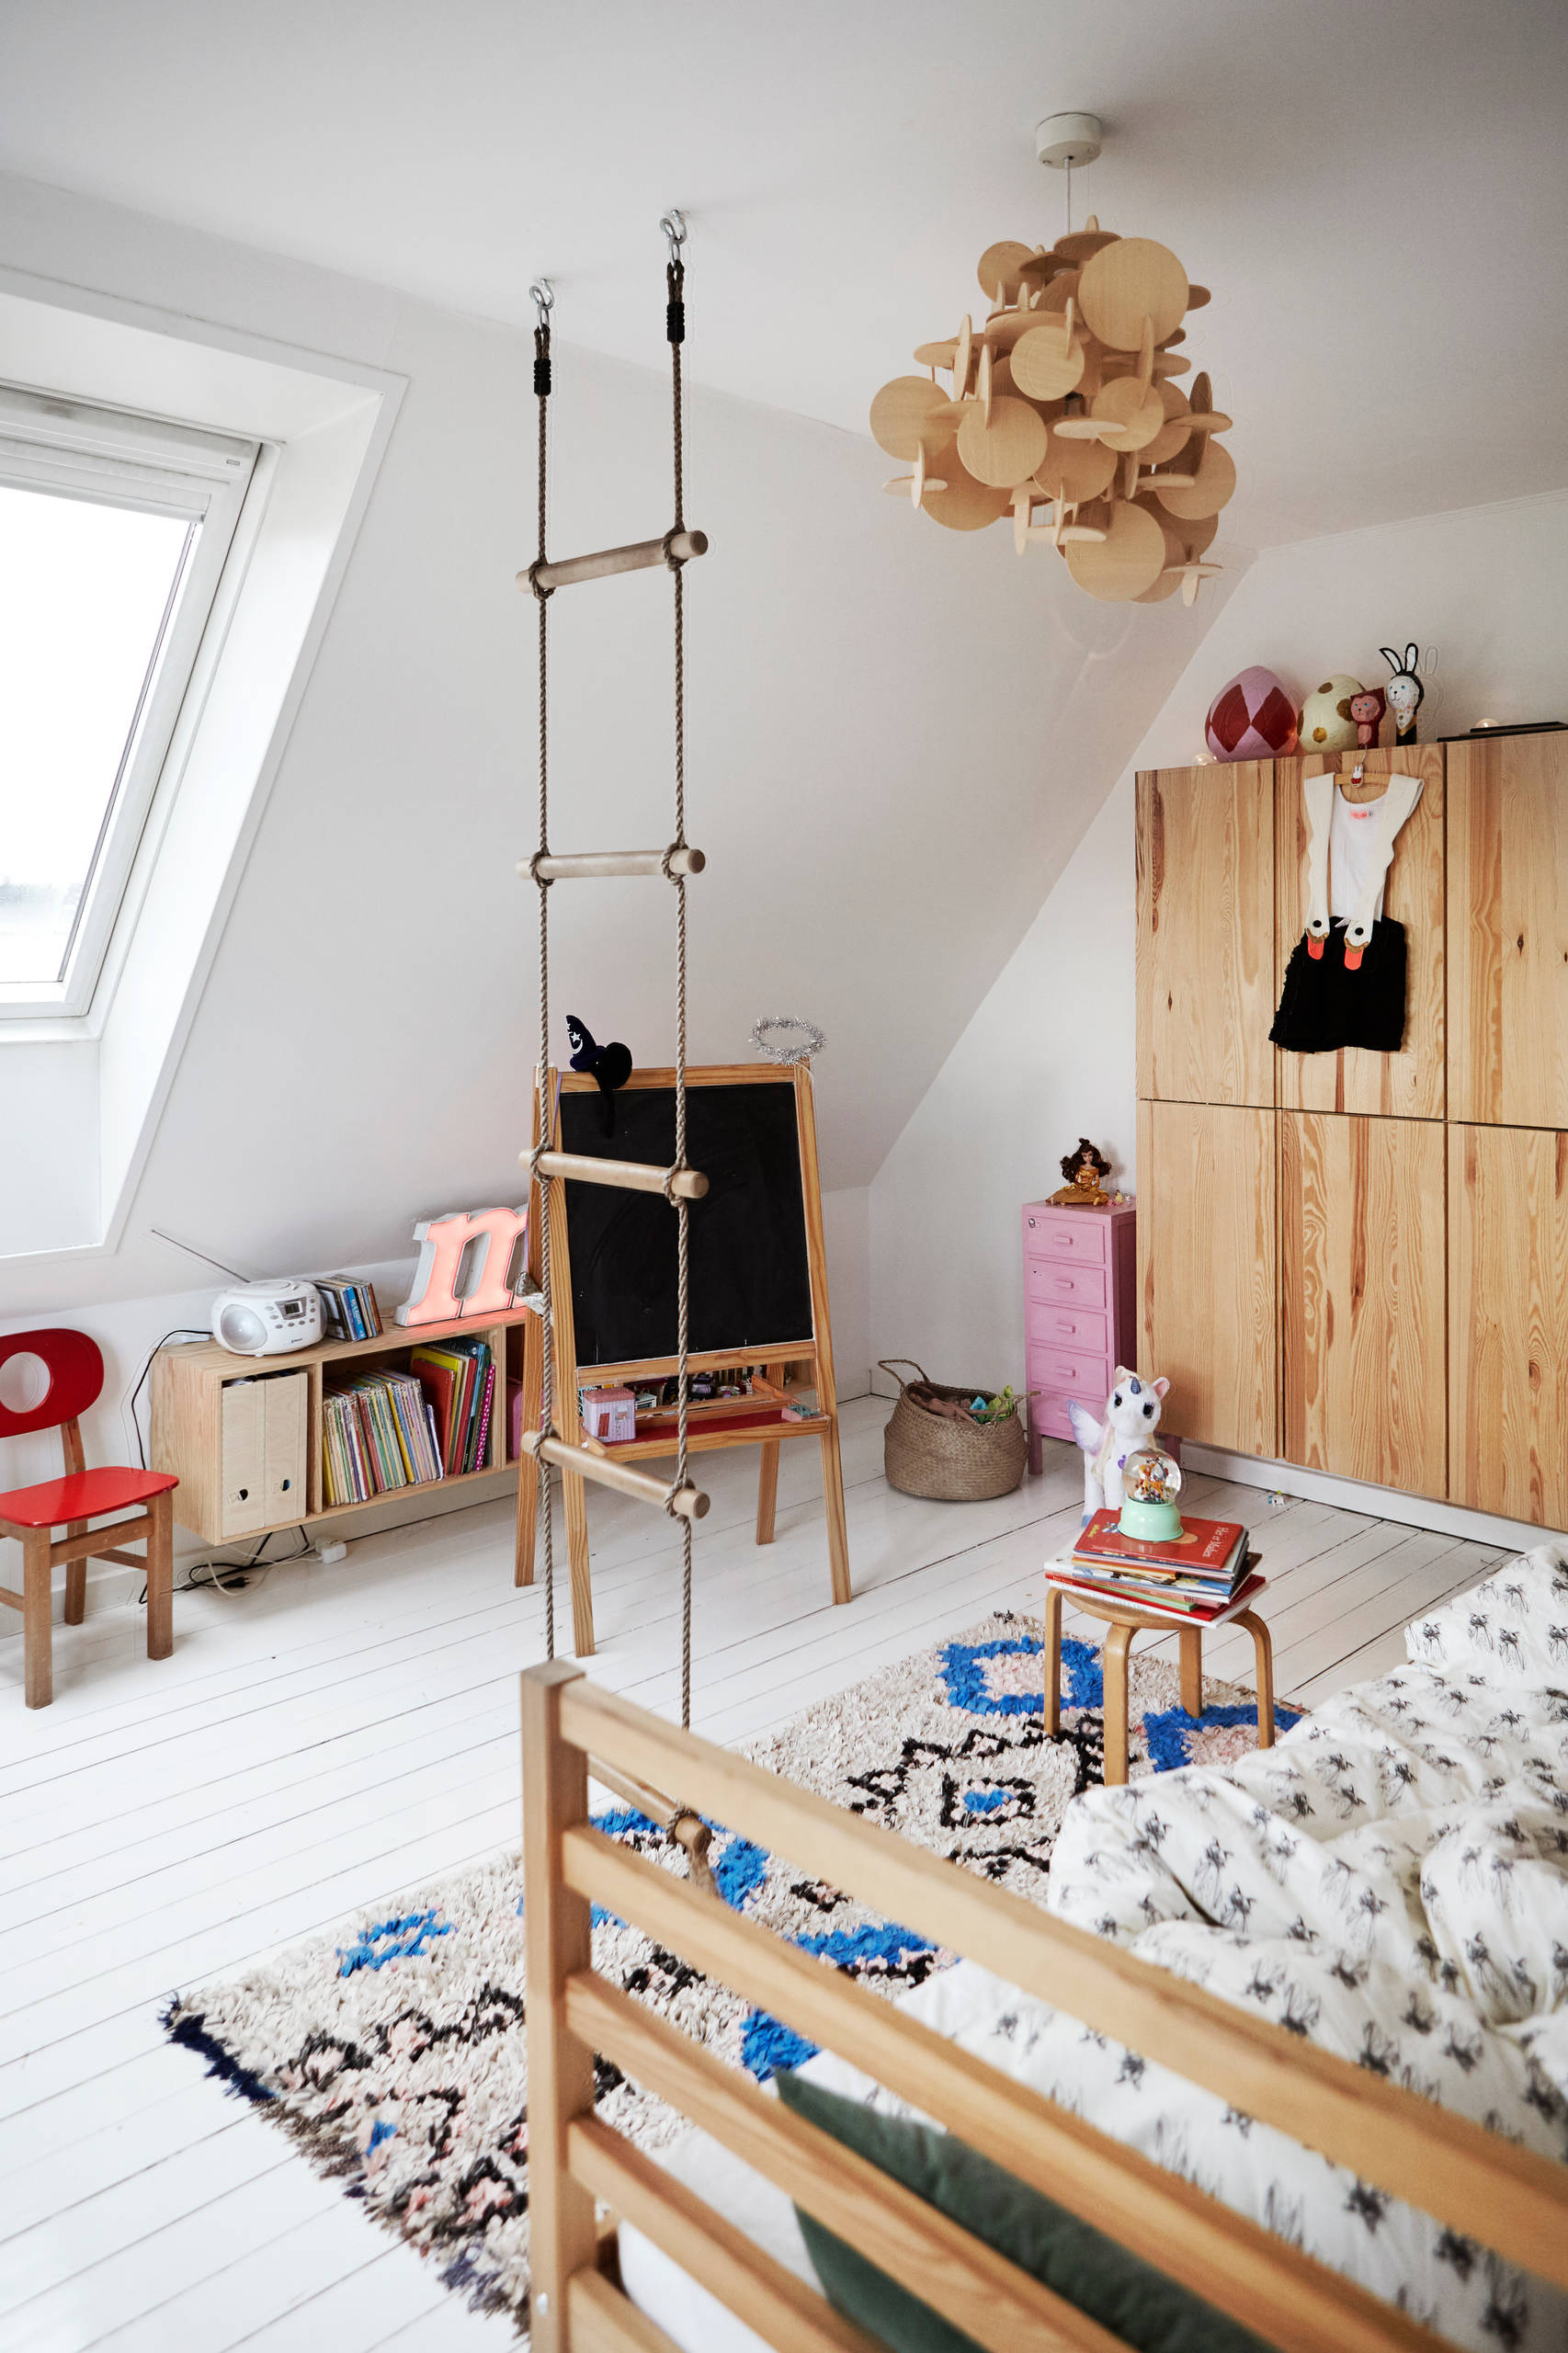 75 Painted Wood Floor Playroom Ideas You'll Love - August, 2022 | Houzz